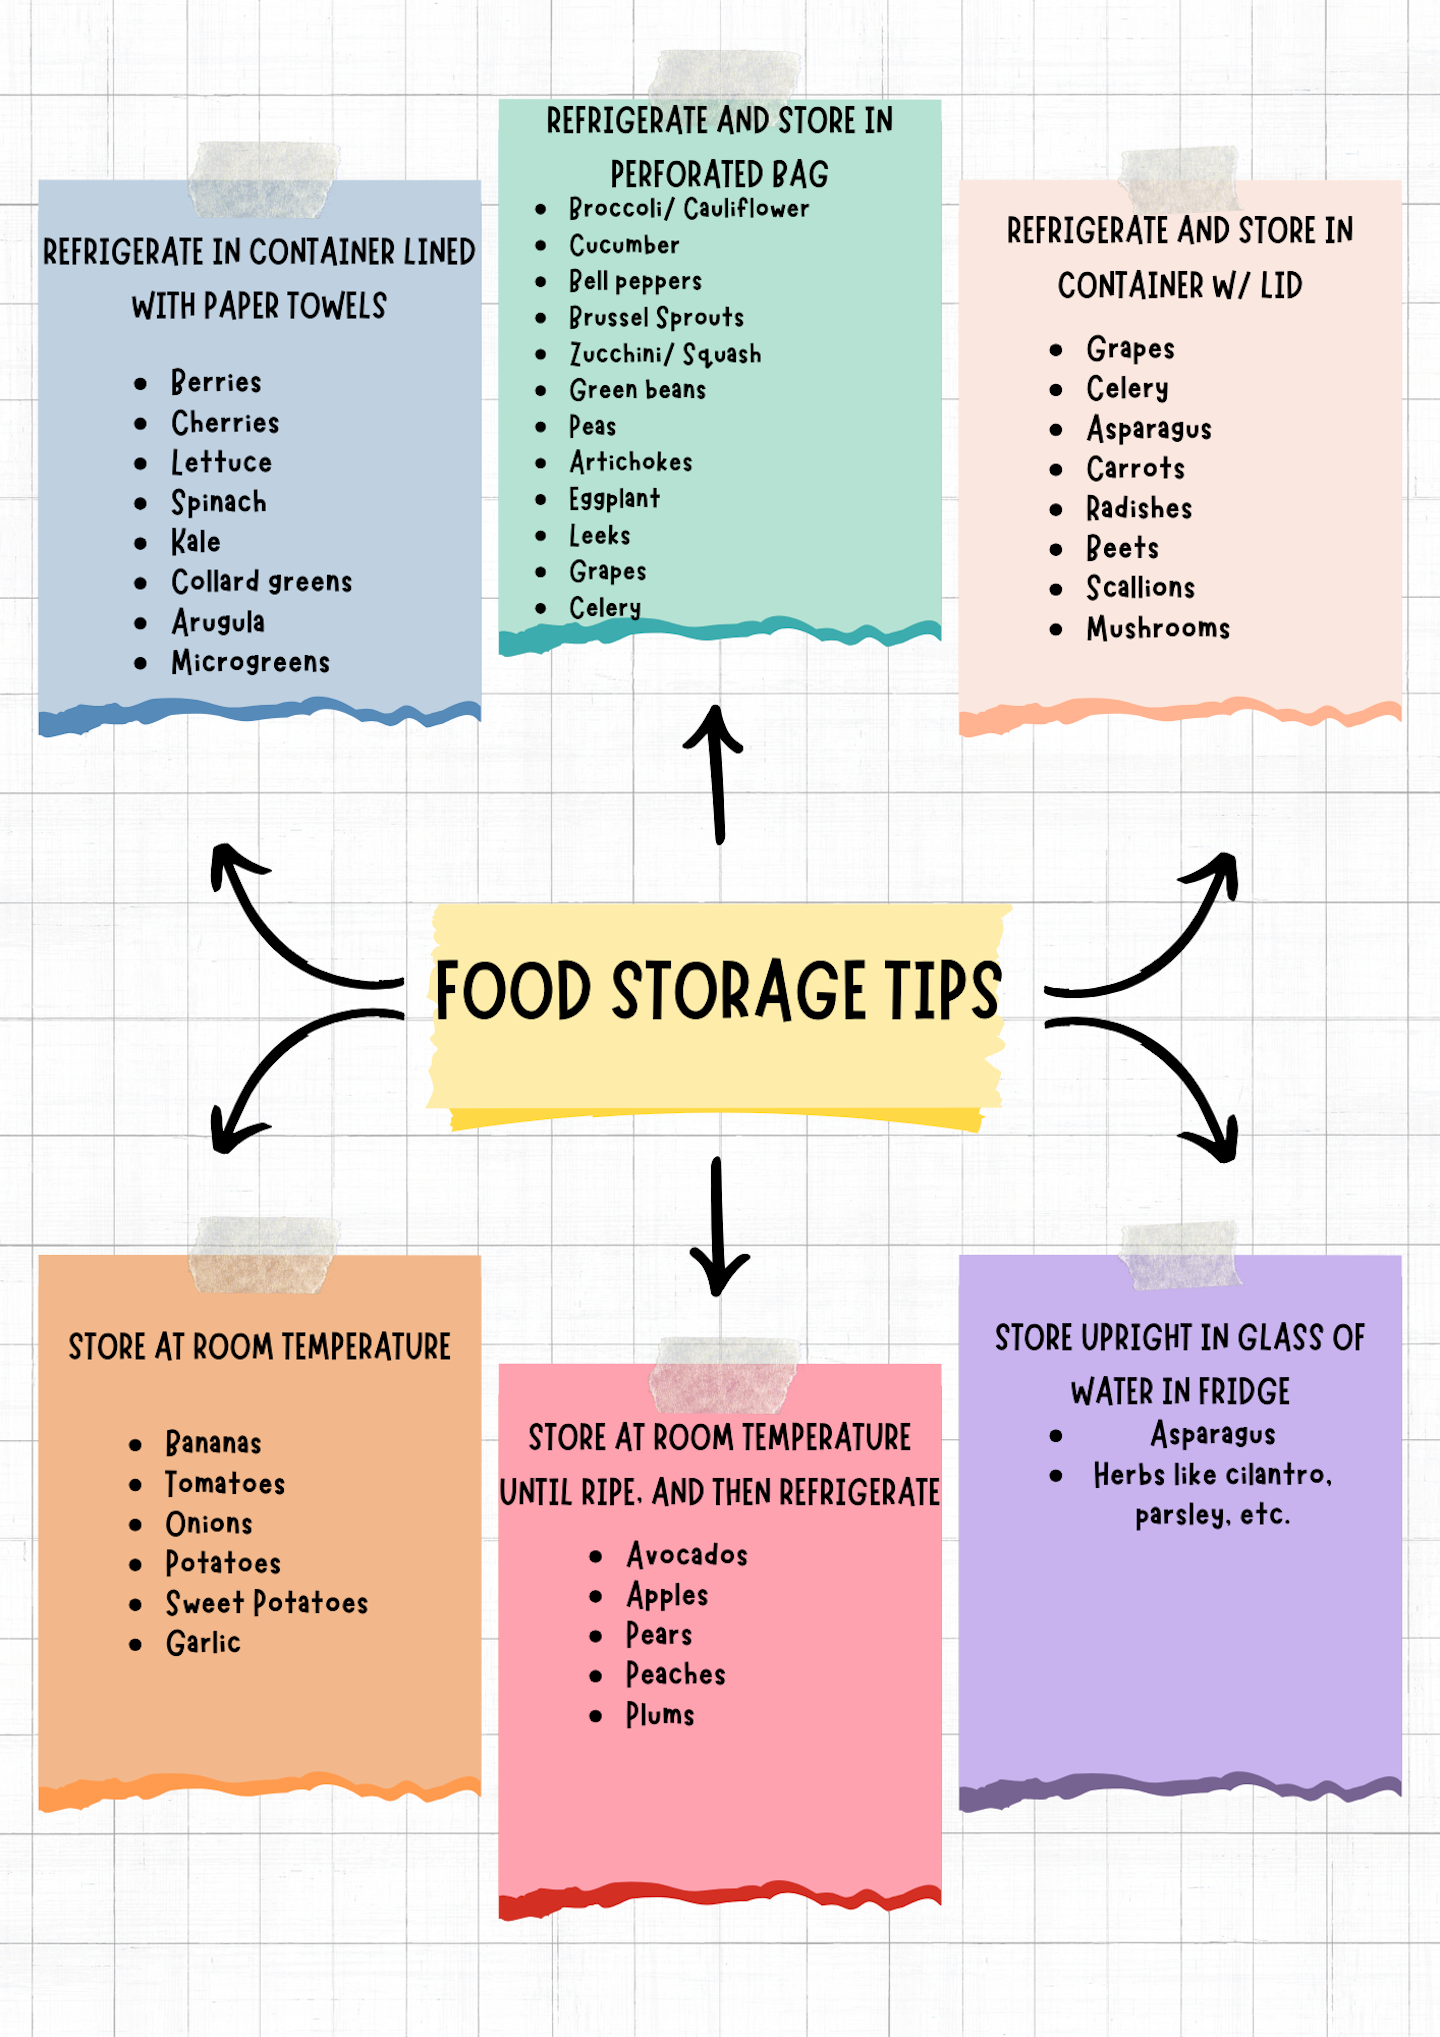 Food storage tips infographic